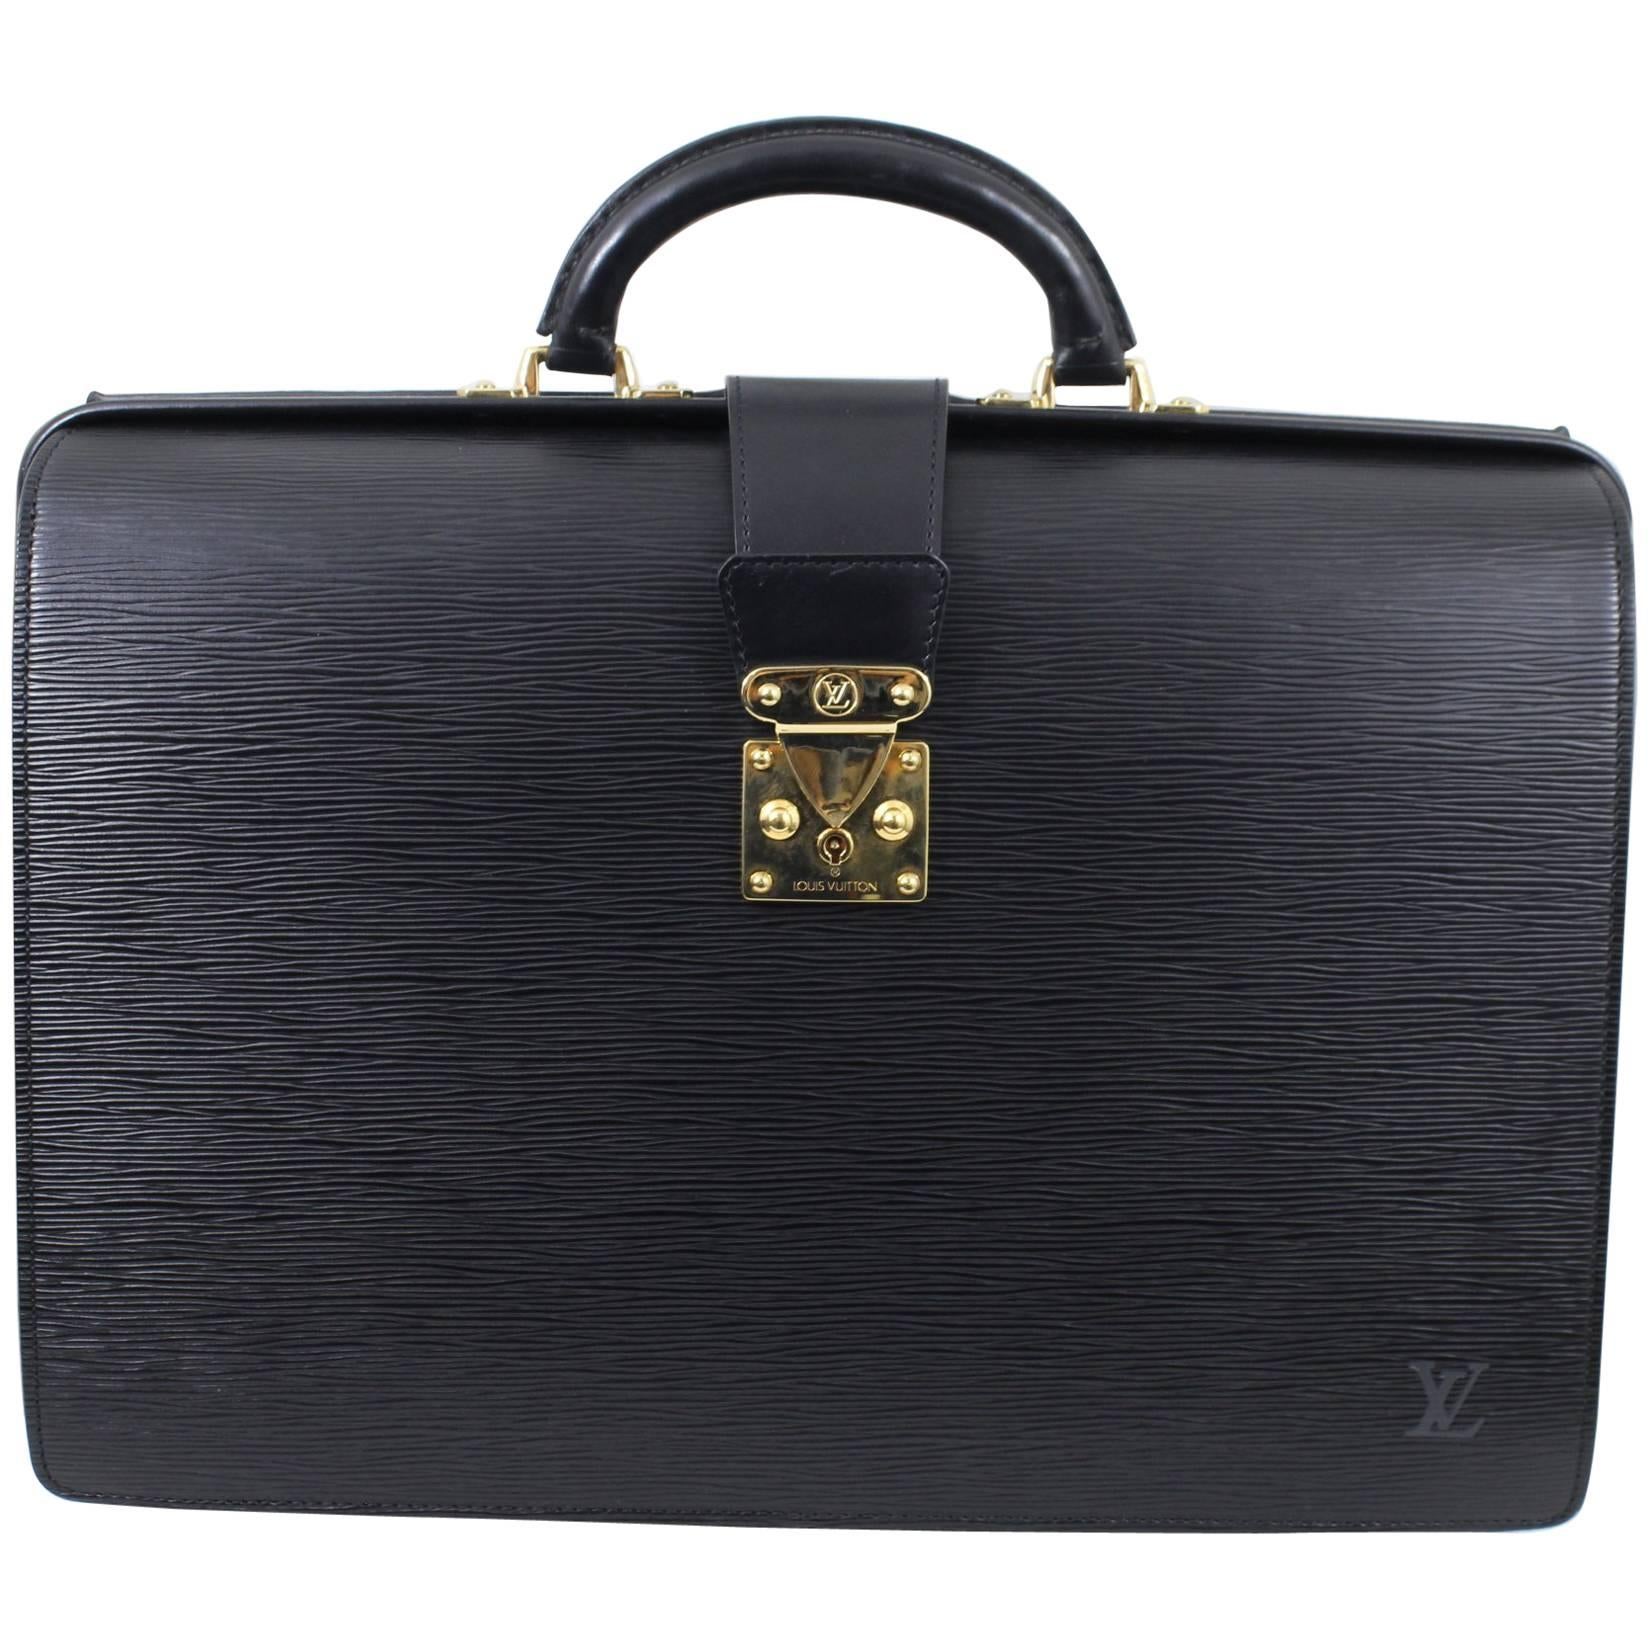 Vintage 1998 Louis Vuitton "Fermoir" Briefcase in Black Epi Leather